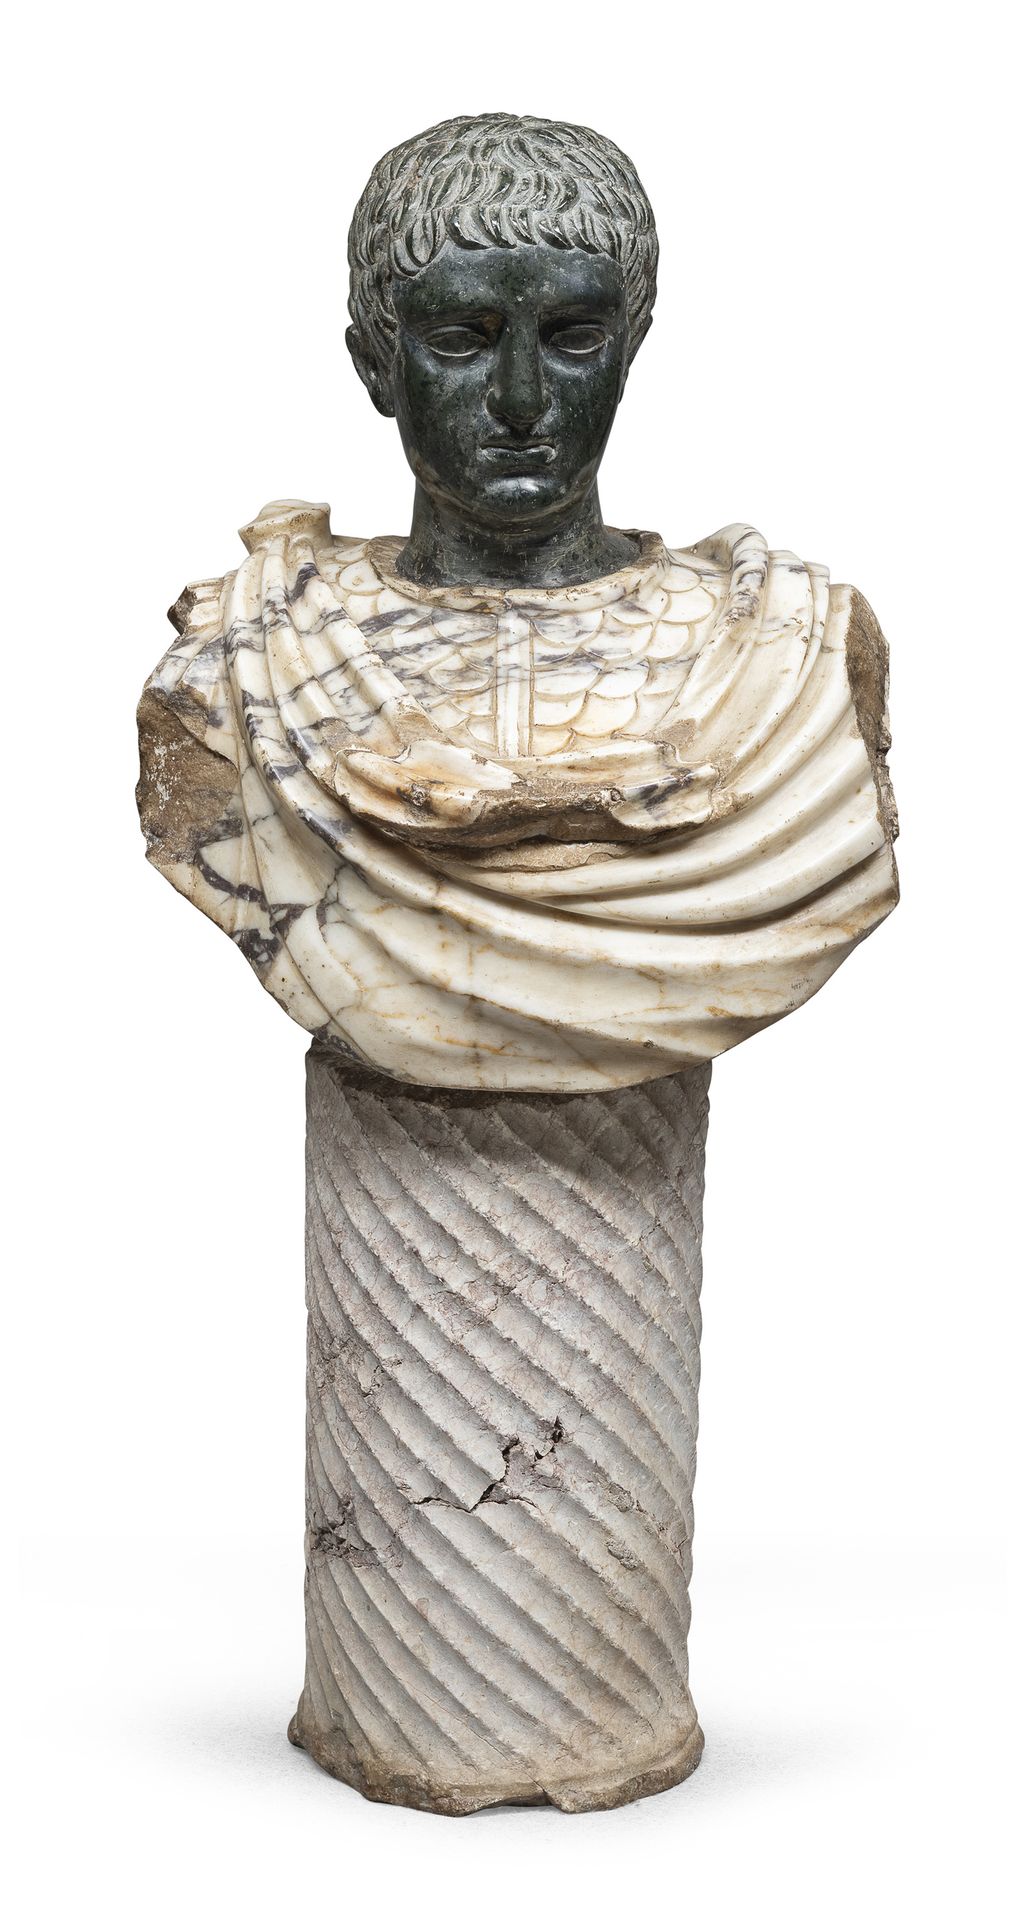 Null 朱利叶斯-凯撒的大理石半身像，18世纪

头部为黑色大理石，半身完全由桃花大理石制成。配有无关的中世纪洞石柱基。

胸部尺寸为59 x 51 x 33&hellip;